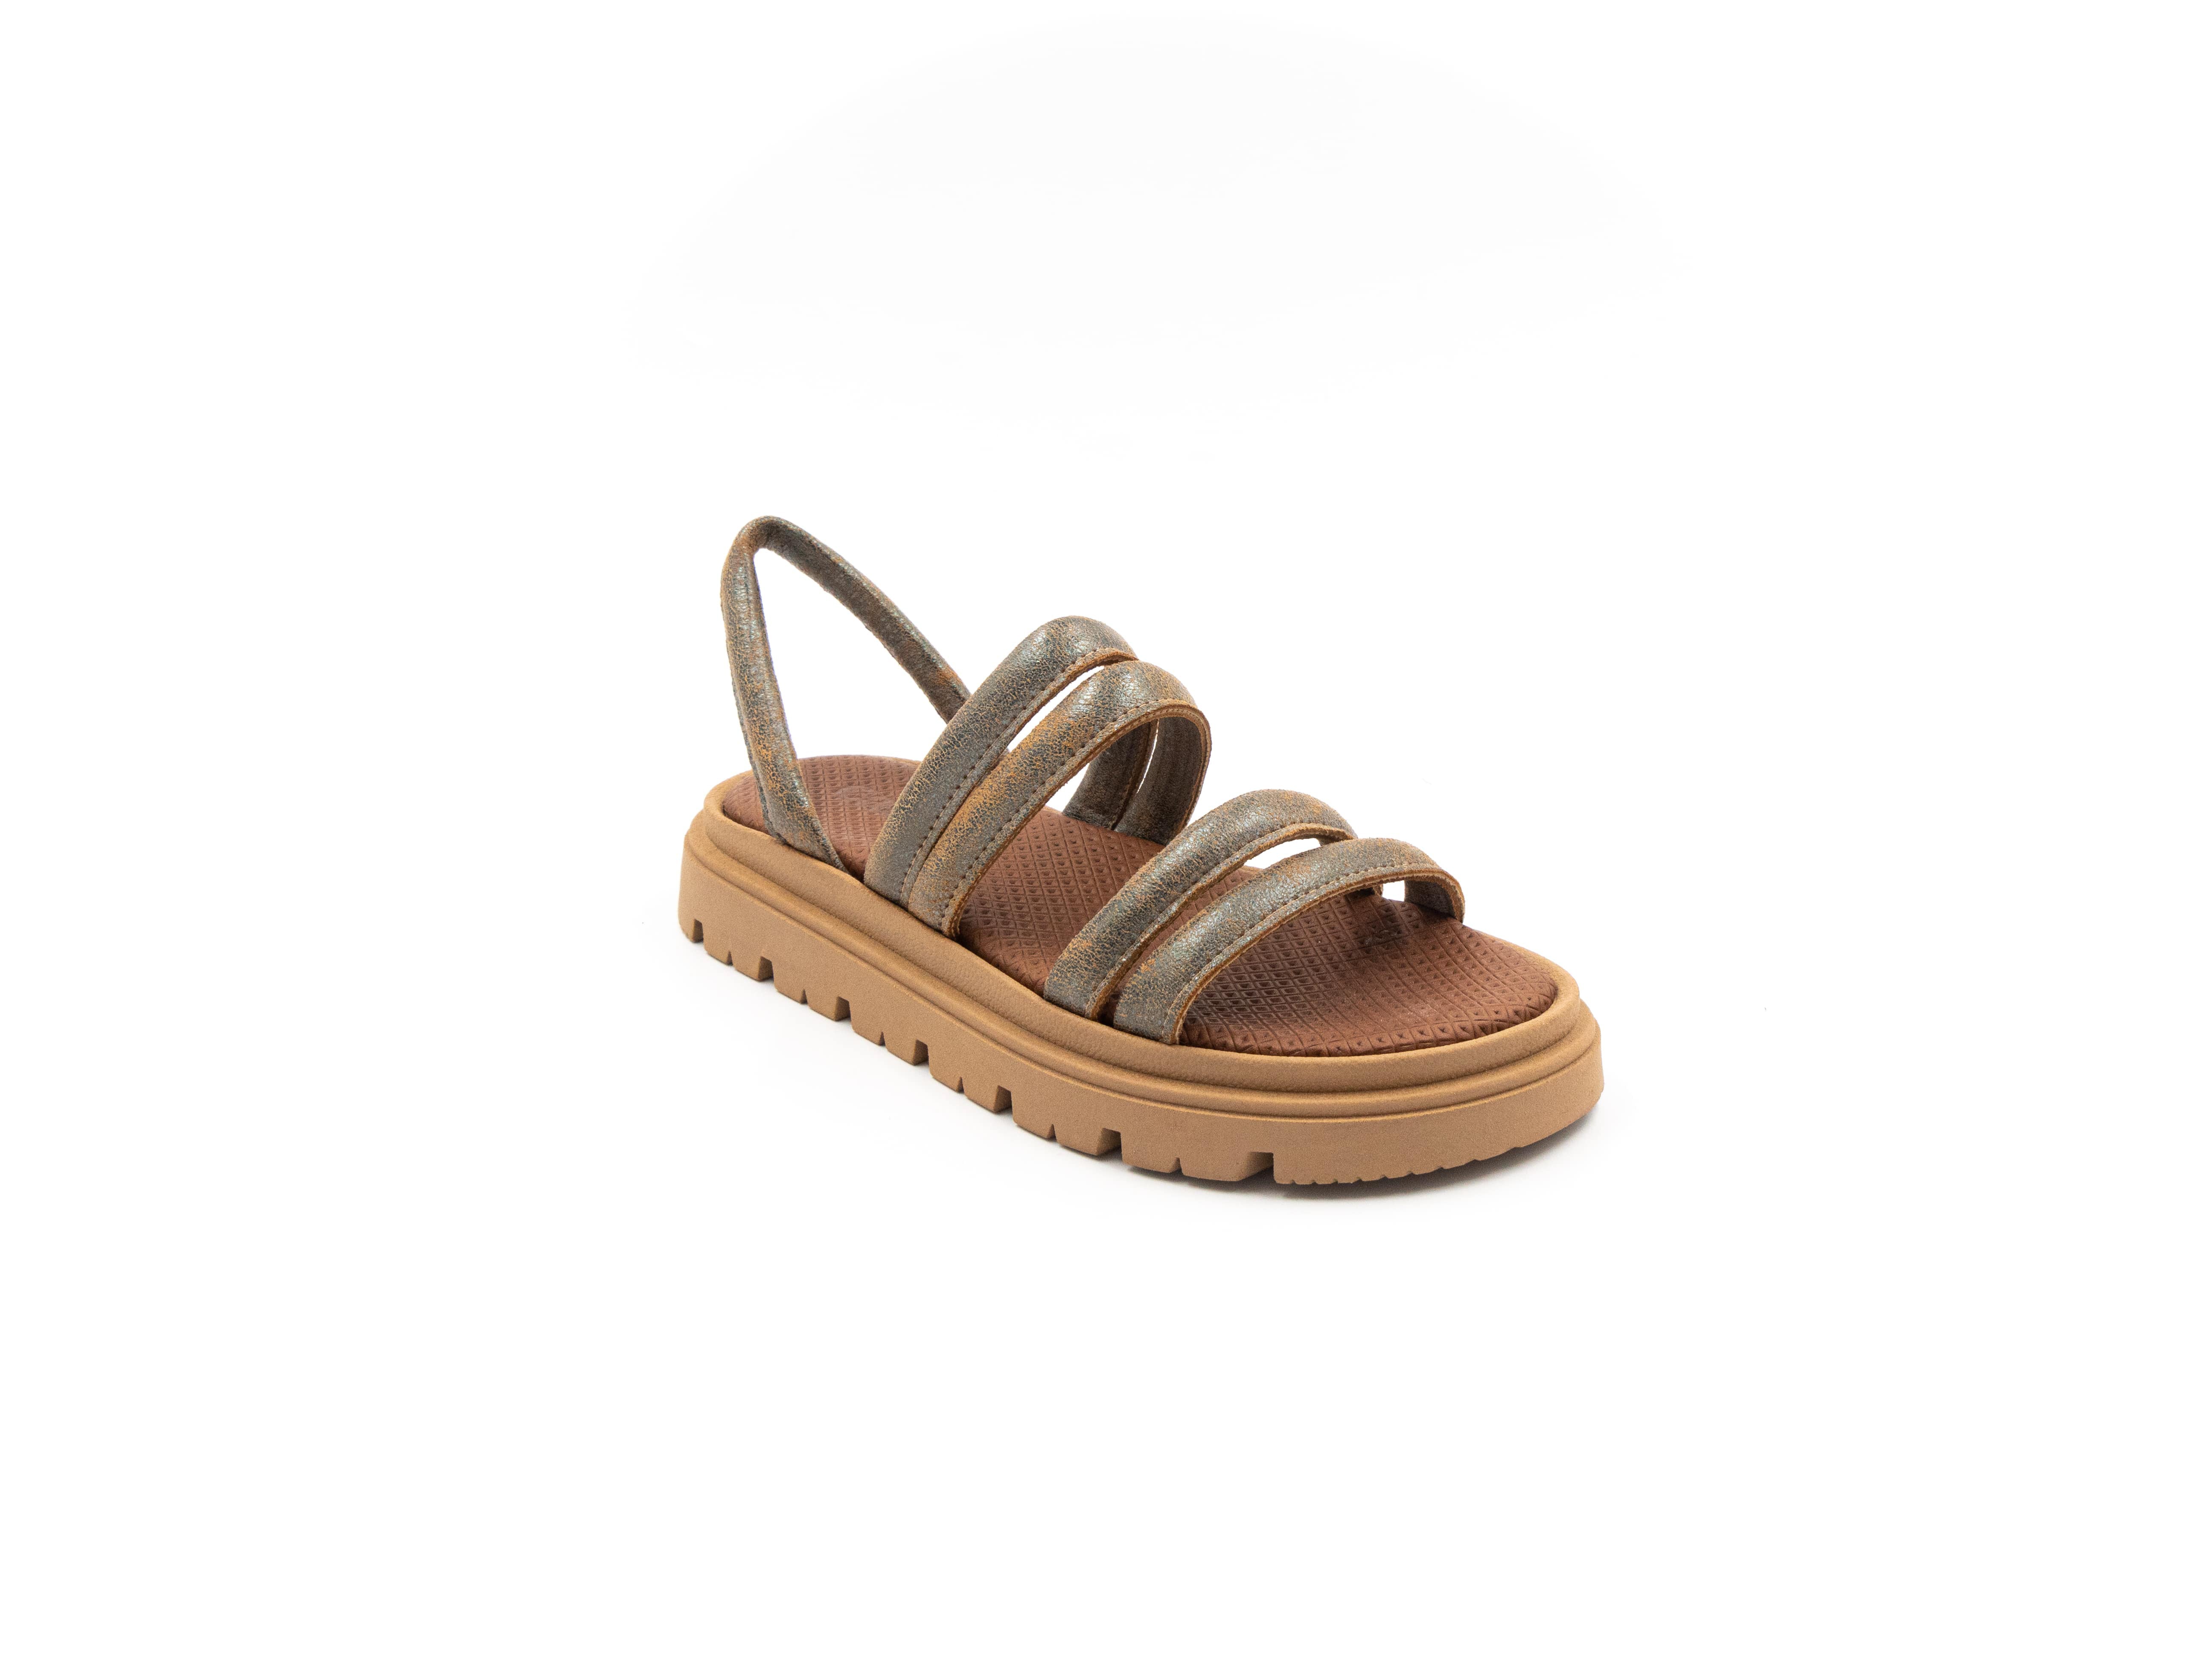 Flat sandal in brown tones.